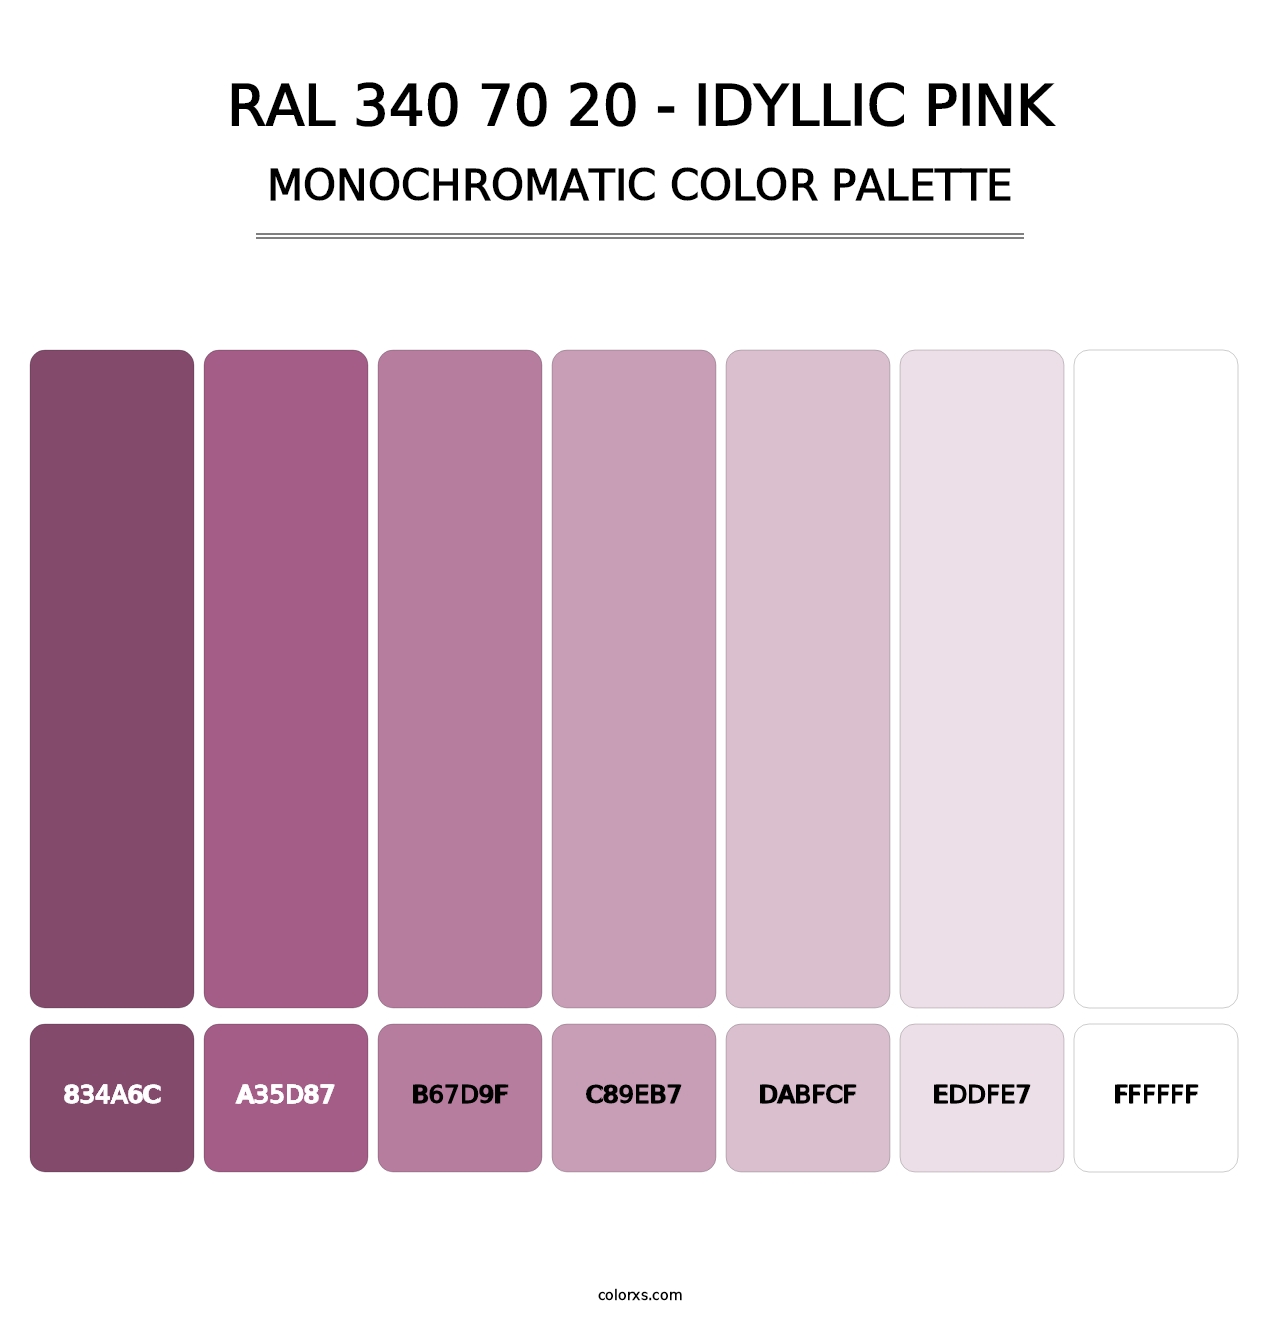 RAL 340 70 20 - Idyllic Pink - Monochromatic Color Palette